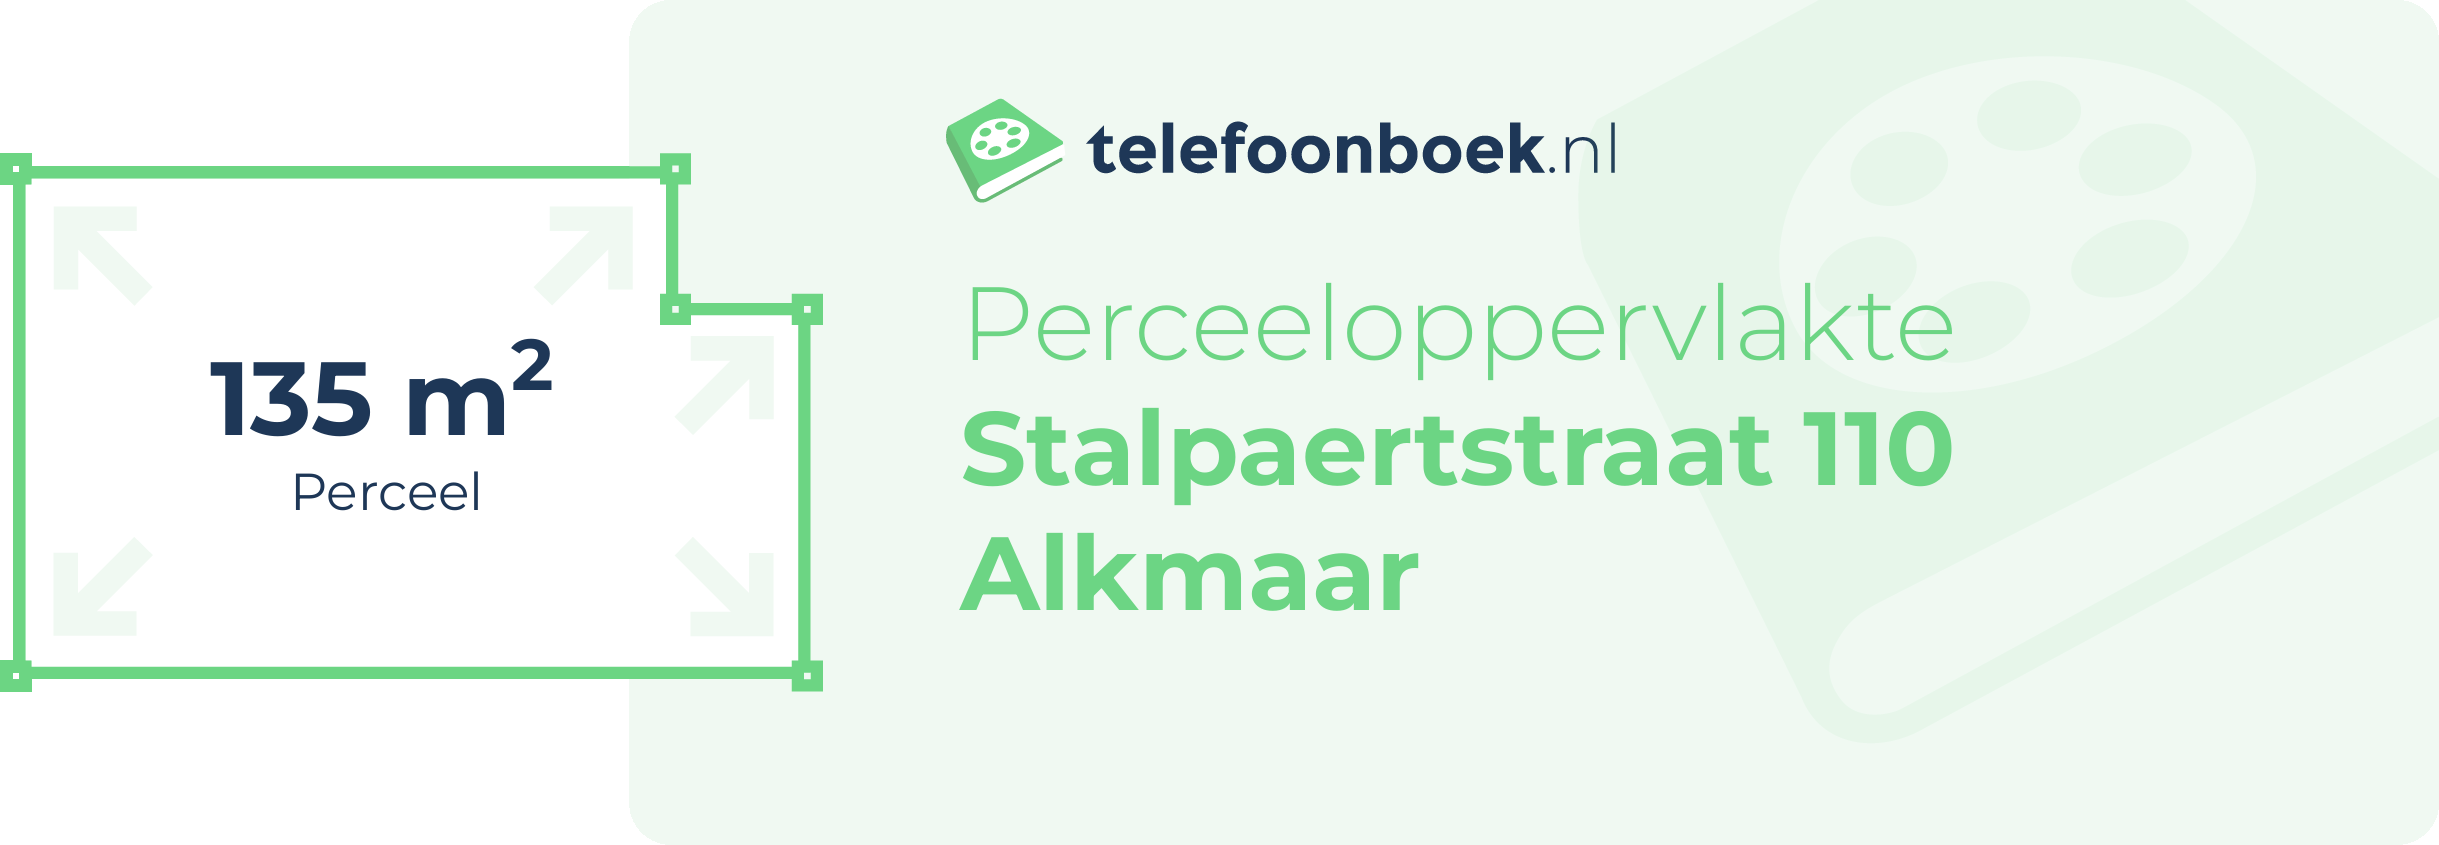 Perceeloppervlakte Stalpaertstraat 110 Alkmaar